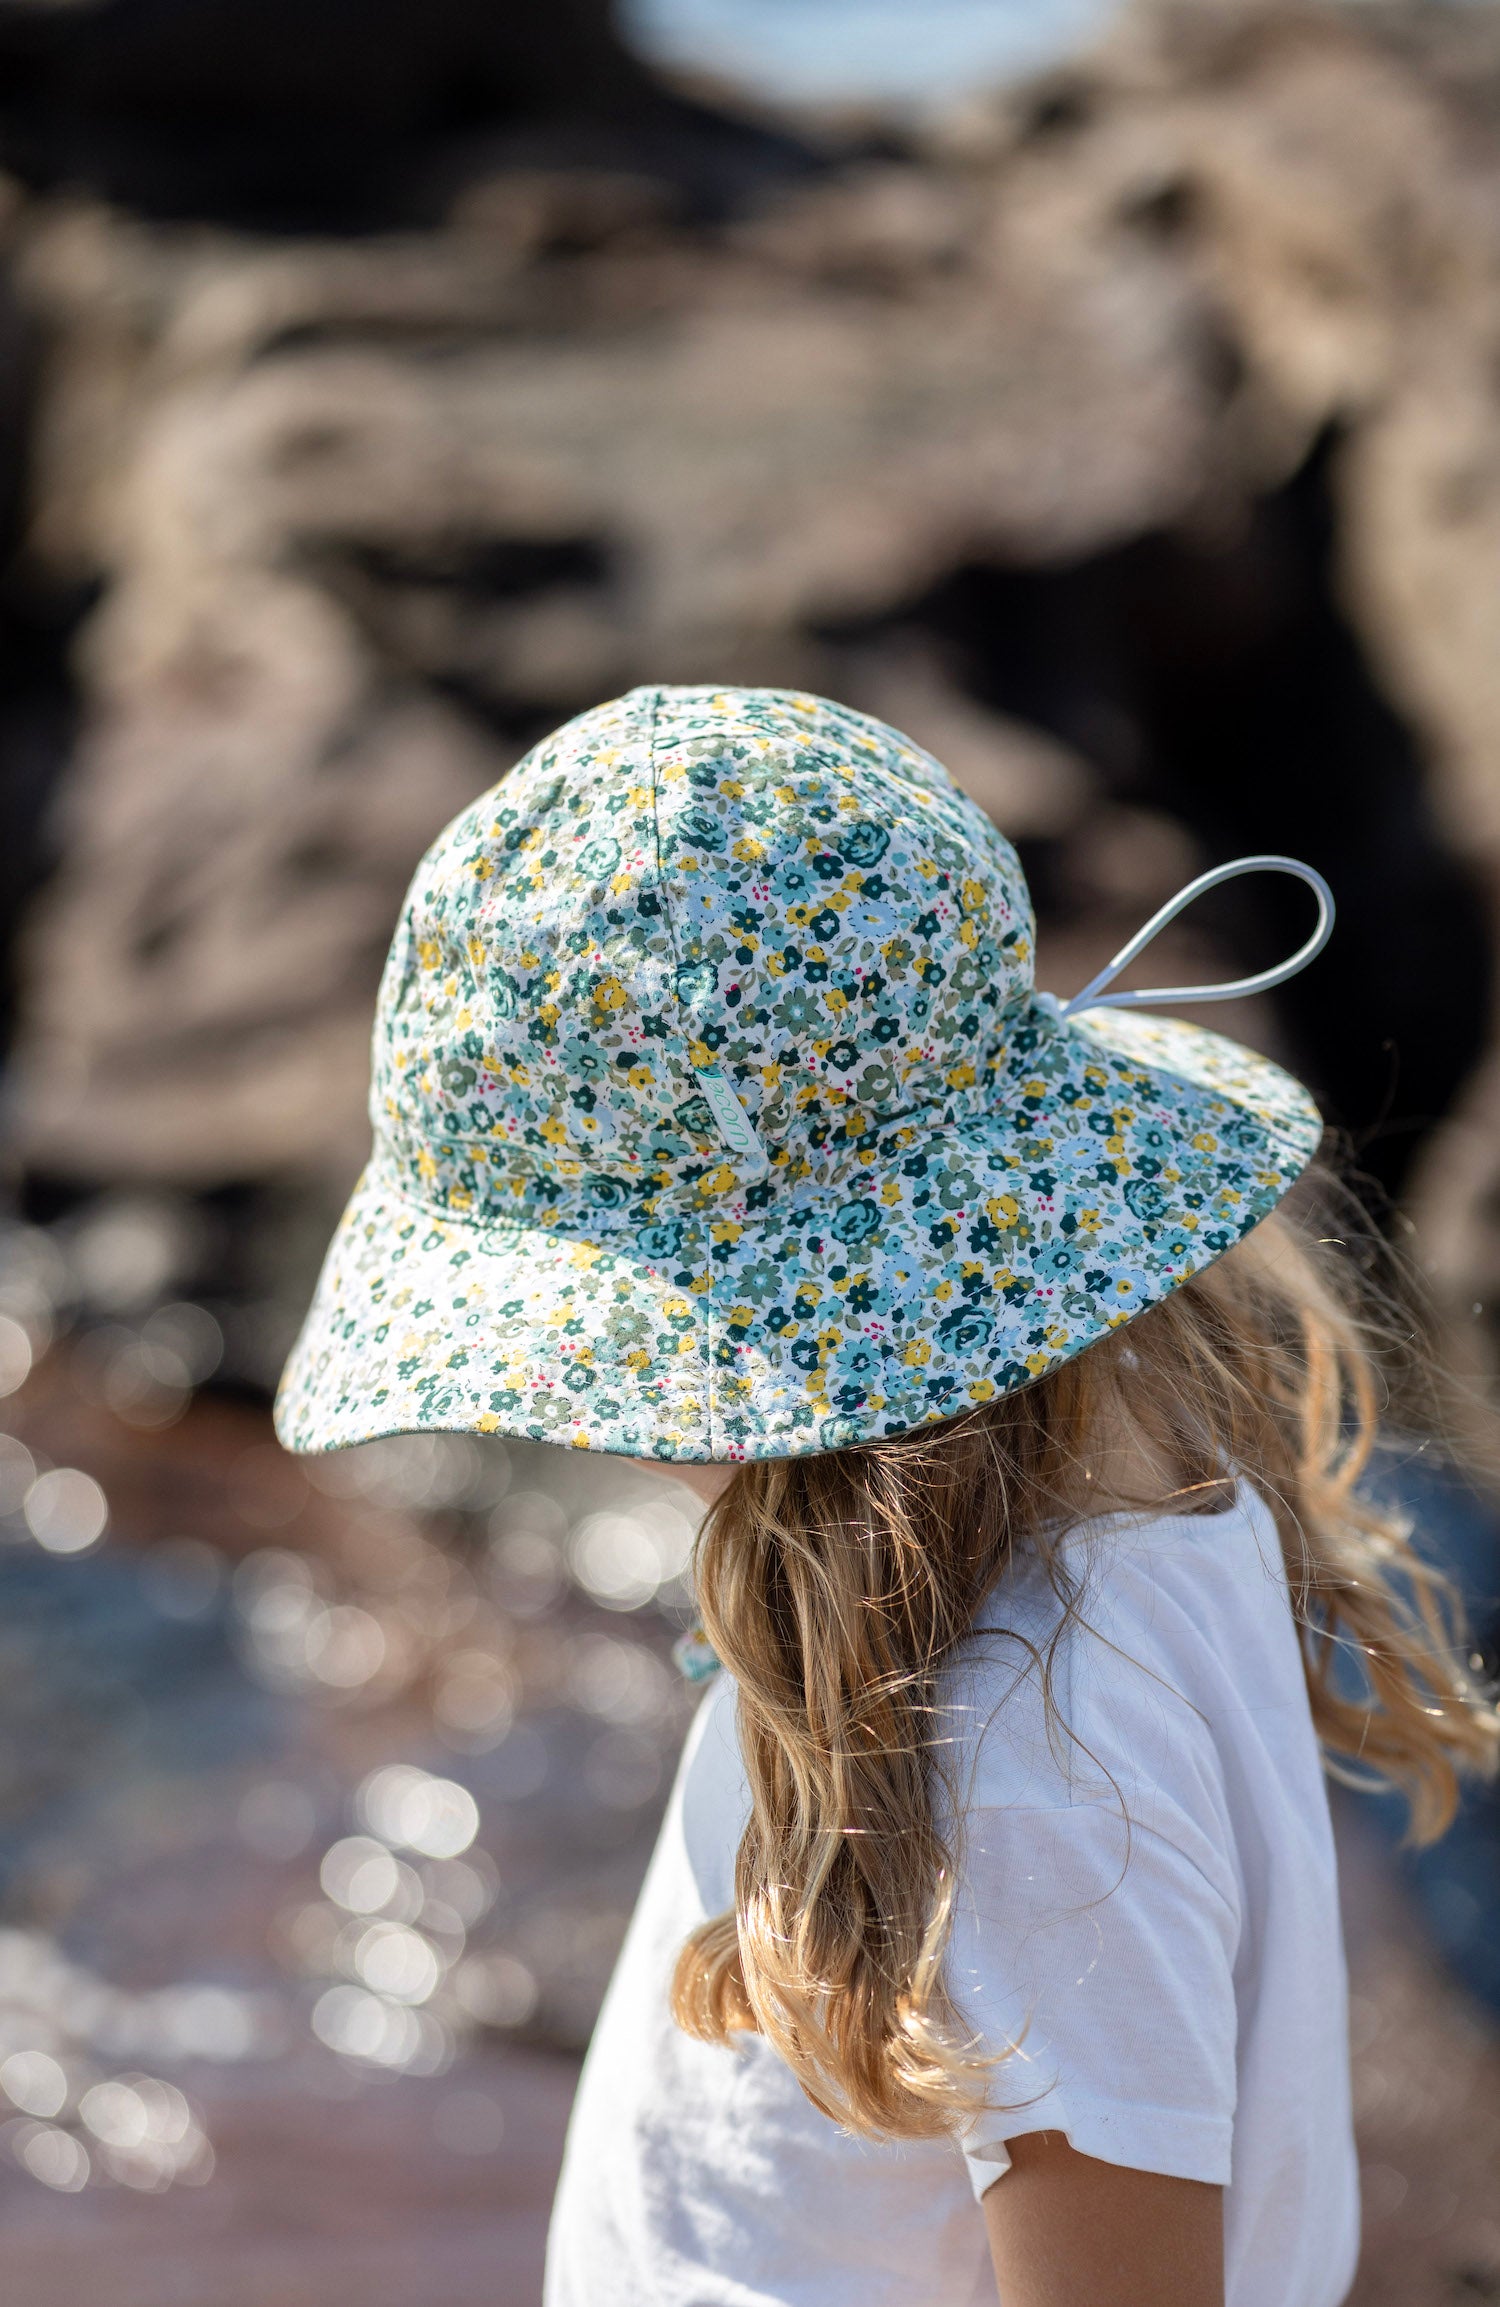 Acorn - Maeve Wide Brim Sun Hat